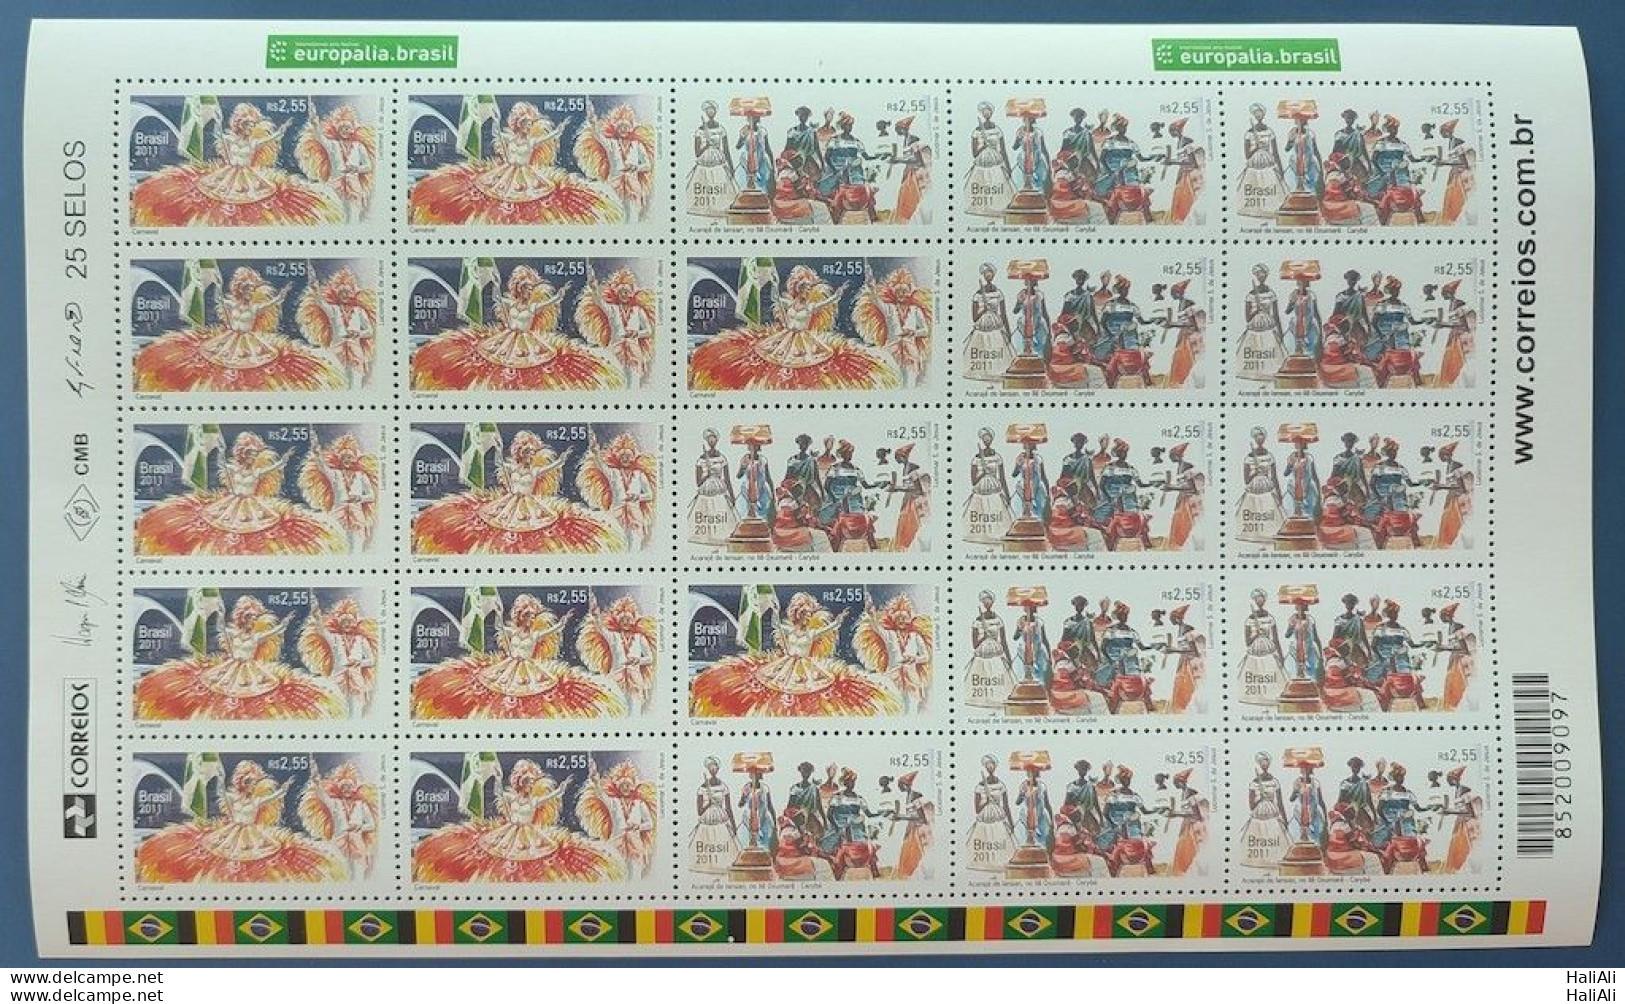 C 3150 Brazil Stamp Diplomatic Relations Belgium Carnival Arte Flag 2011 Sheet - Unused Stamps